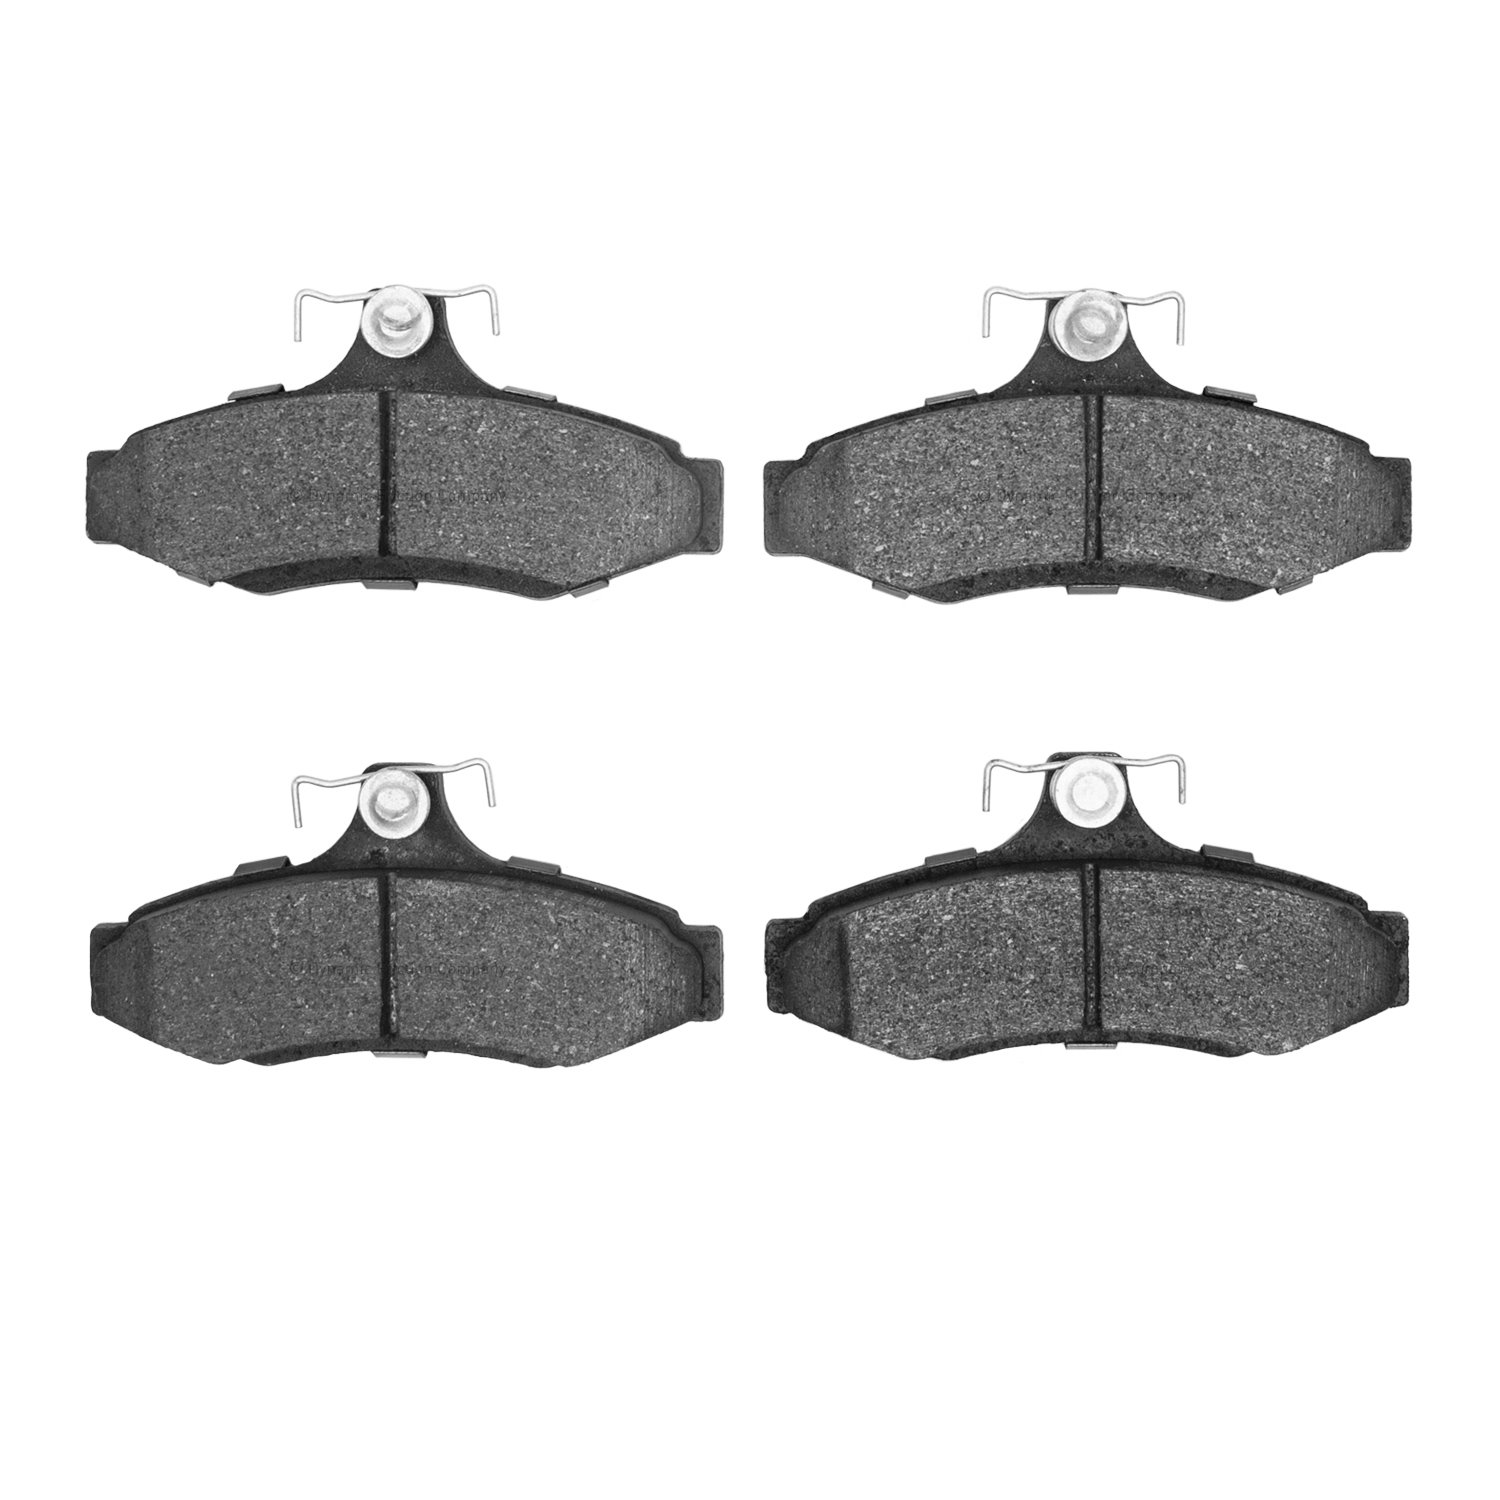 Semi-Metallic Brake Pads, 1997-2004 Fits Multiple Makes/Models, Position: Rear